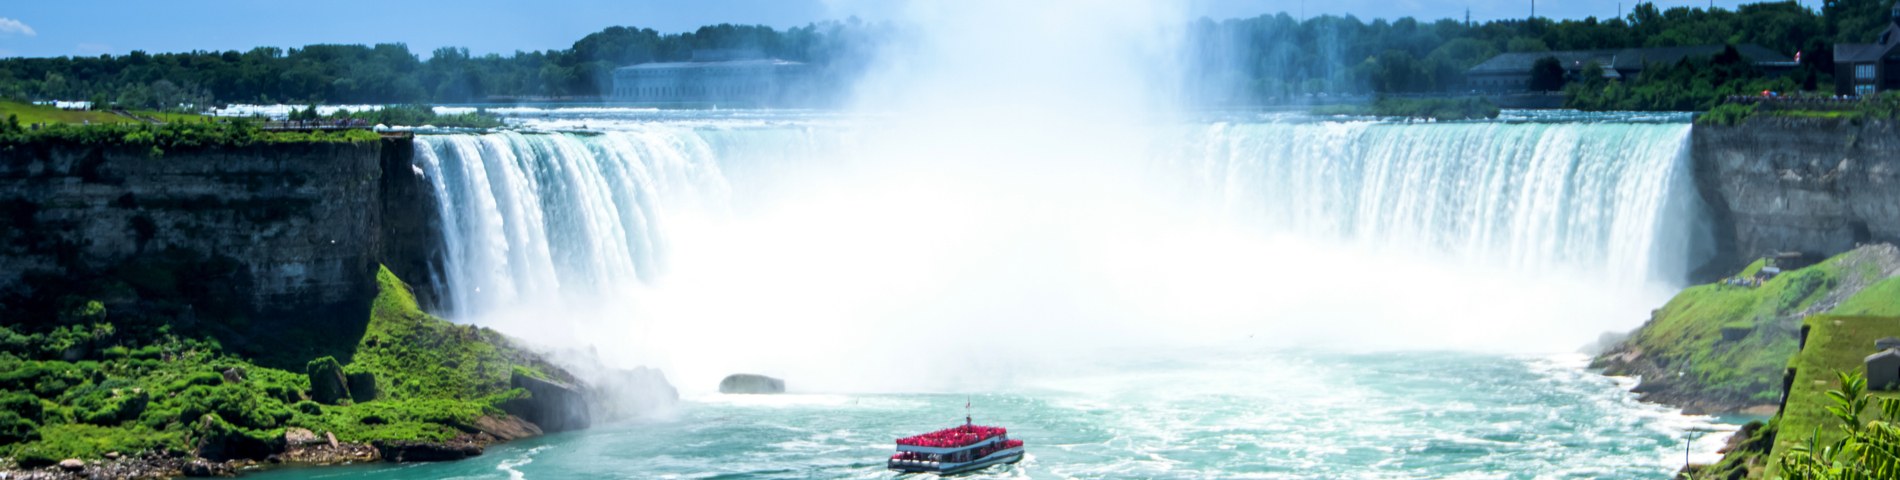 Welland (Niagarafallen)